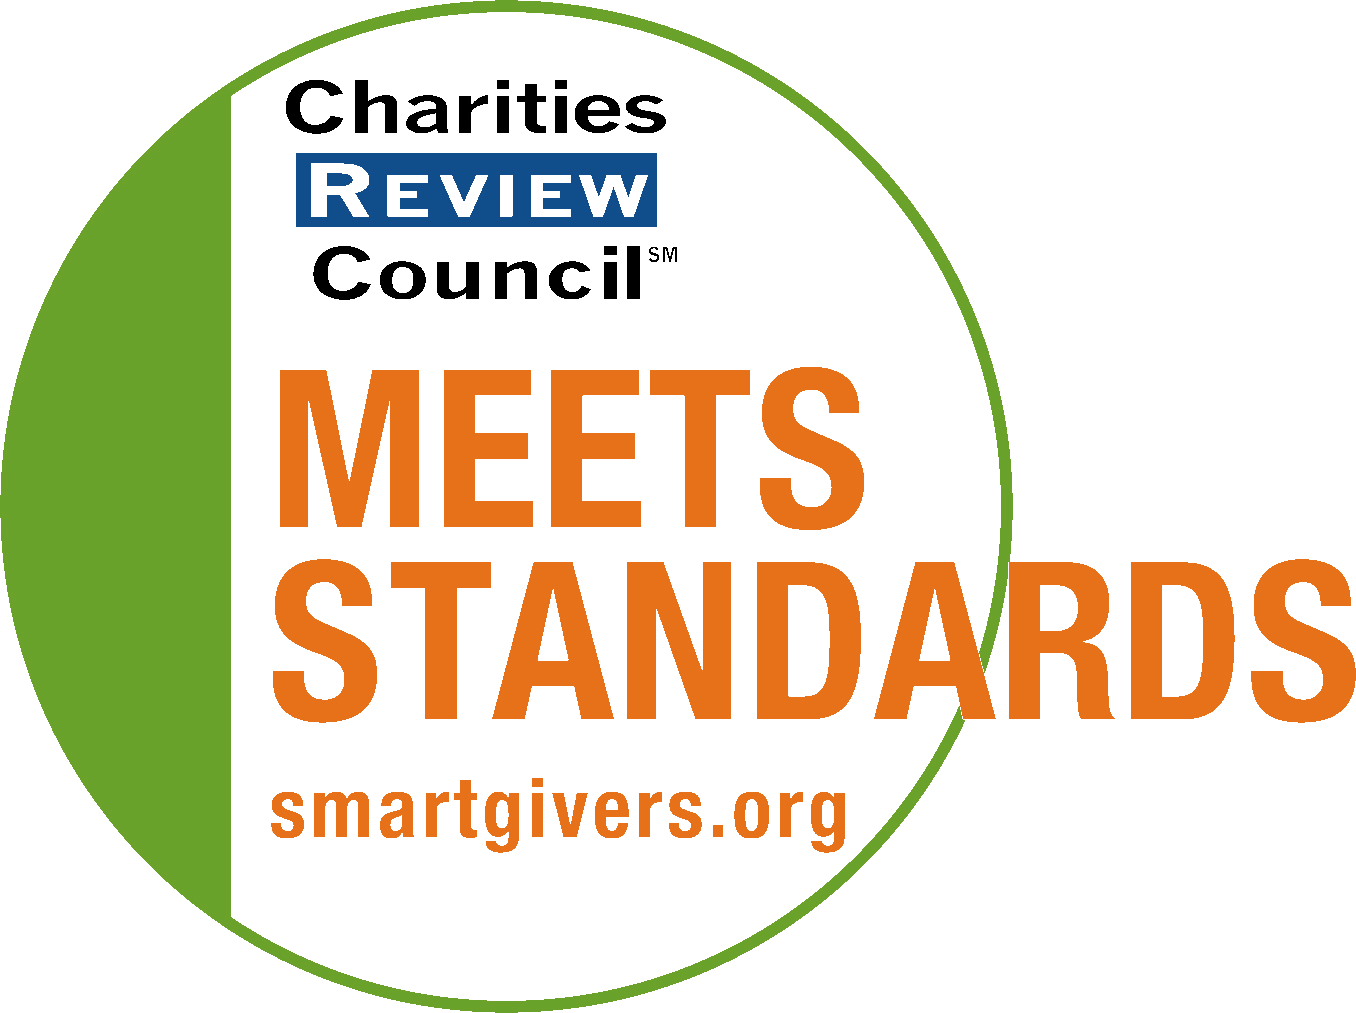 Charities Review Council: Meet Standards